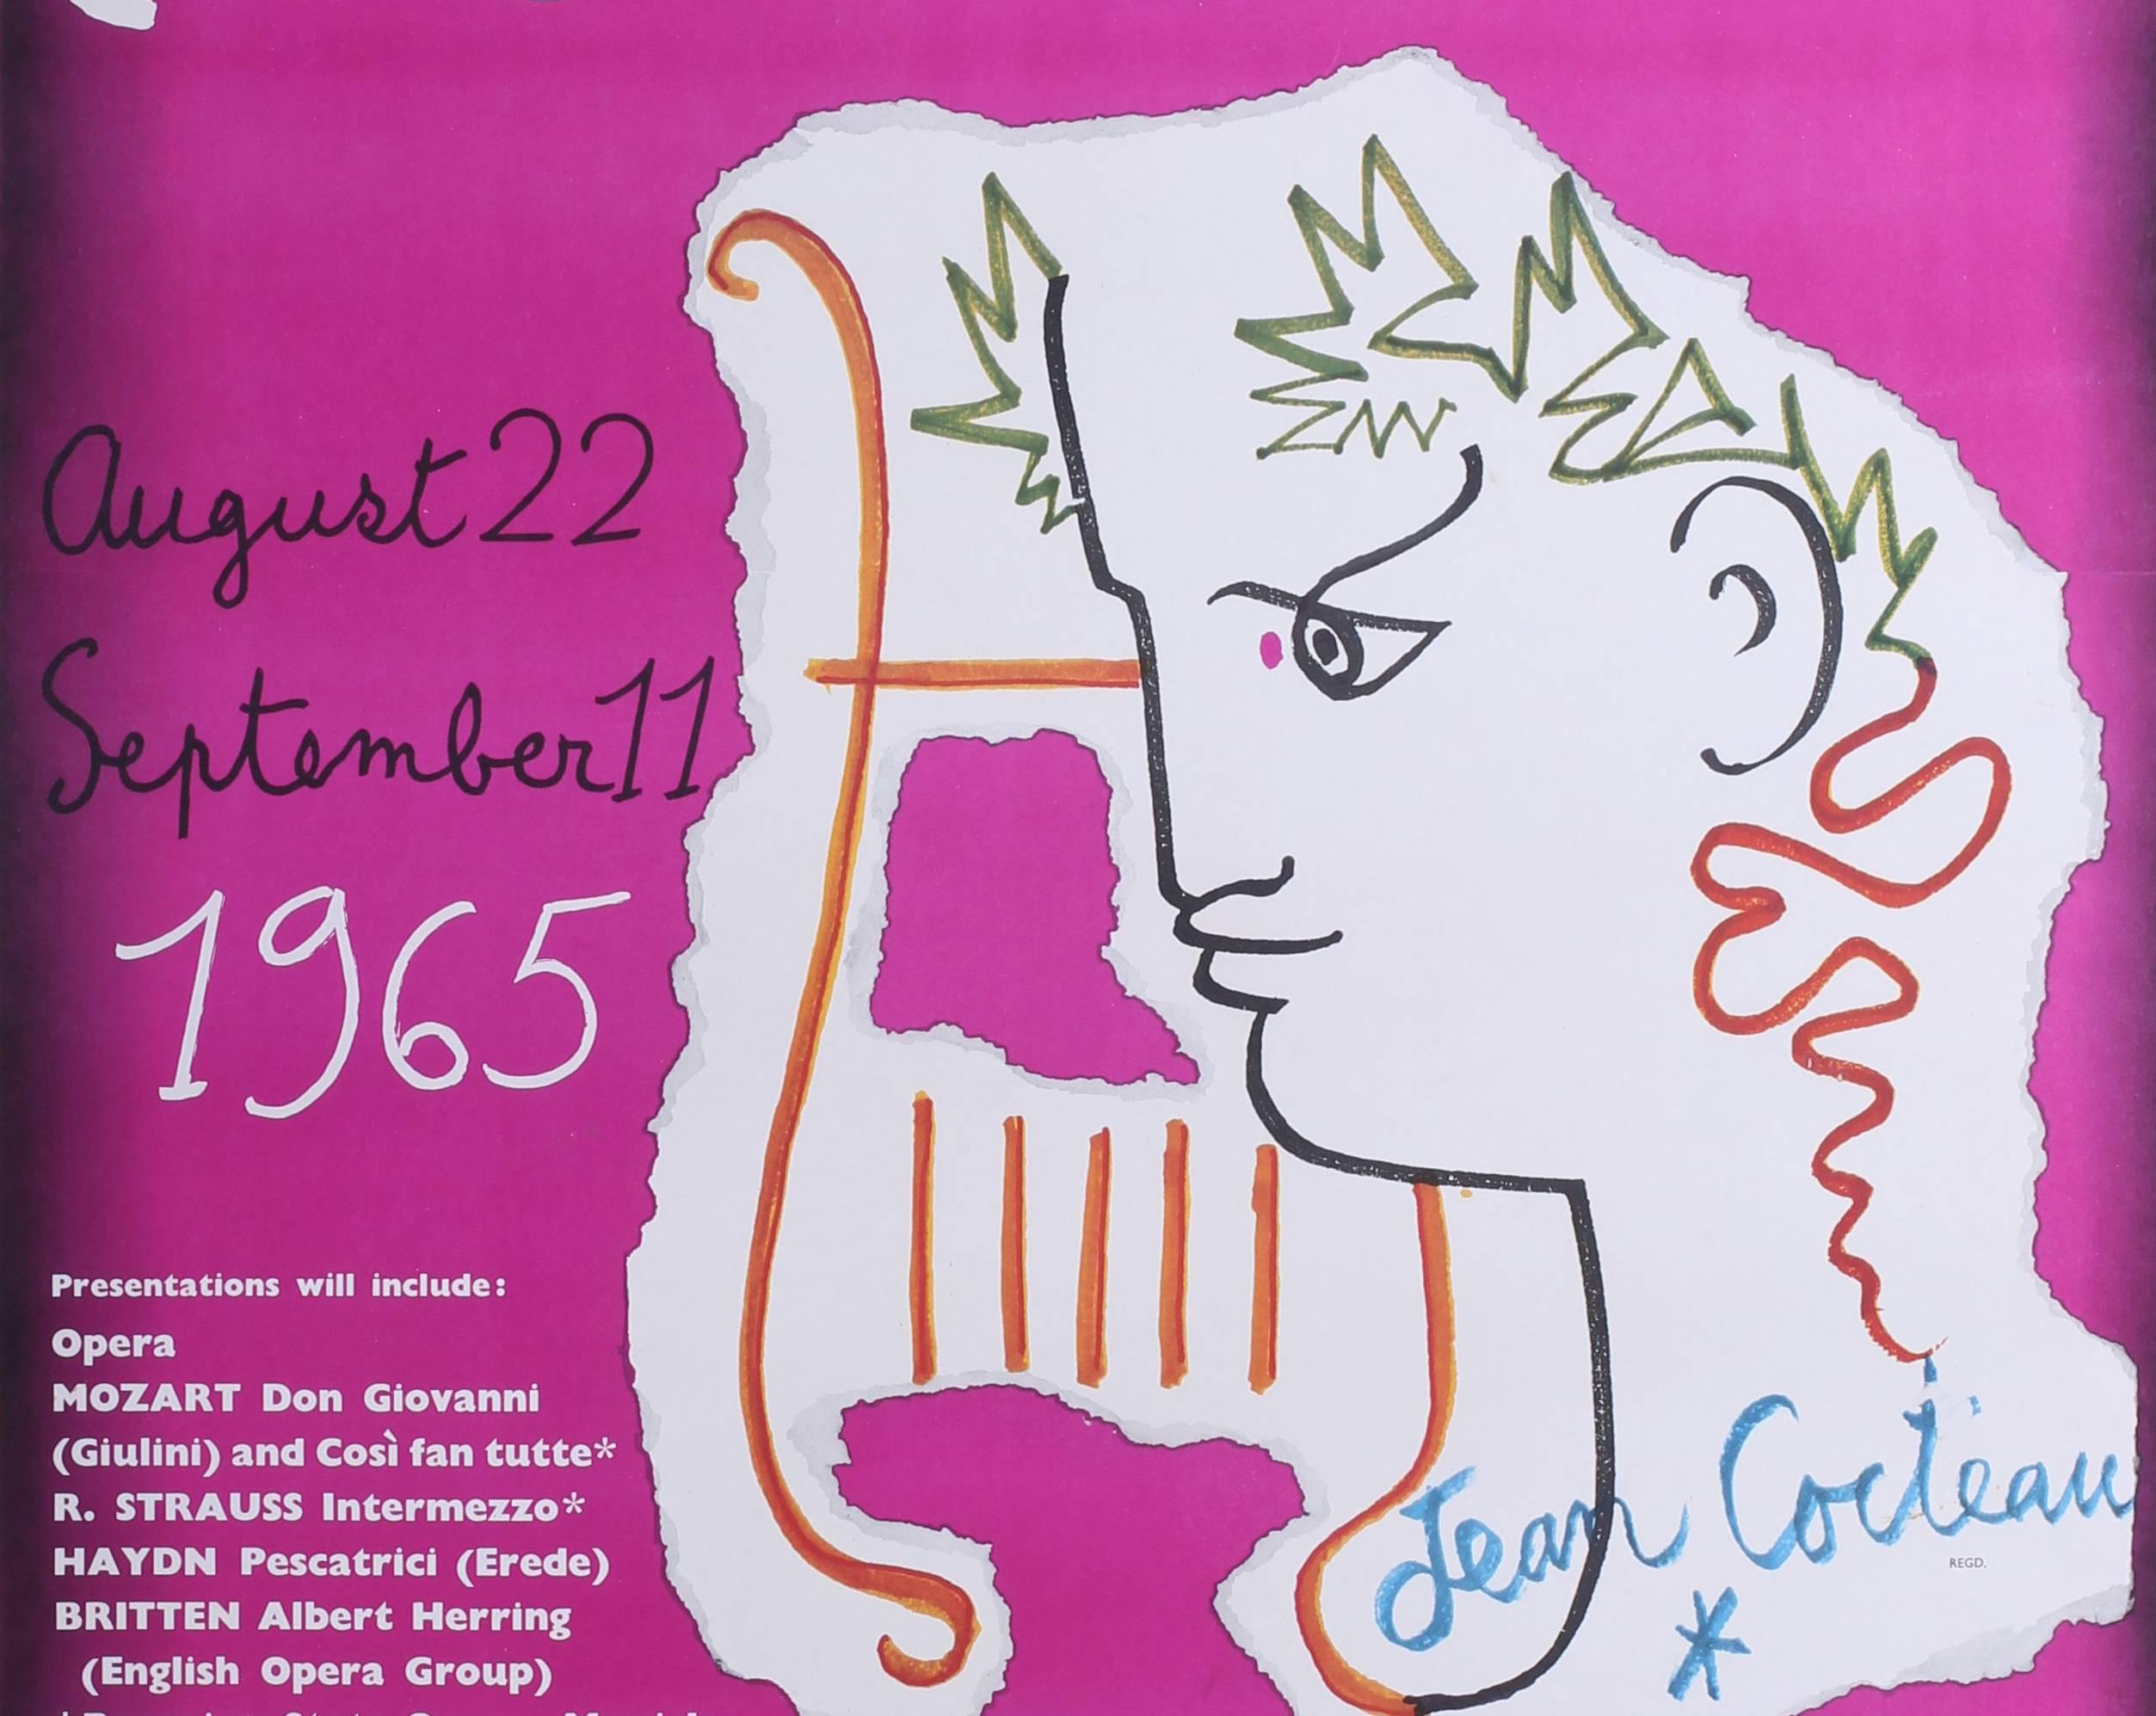 Edinburgh Festival original Poster, 1965 featuring a vignette by Jean Cocteau 1